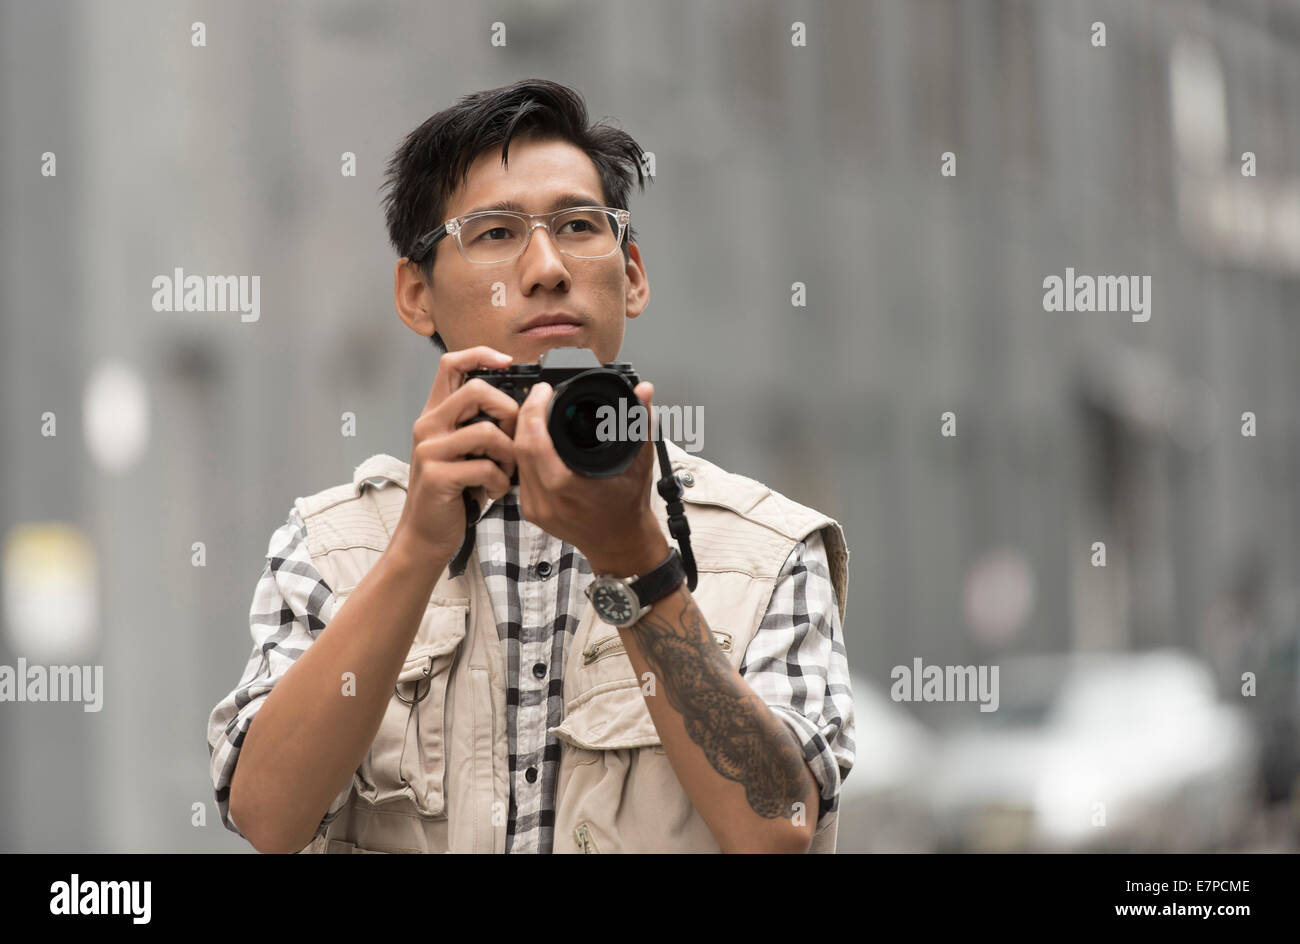 Portrait of man holding camera Stock Photo